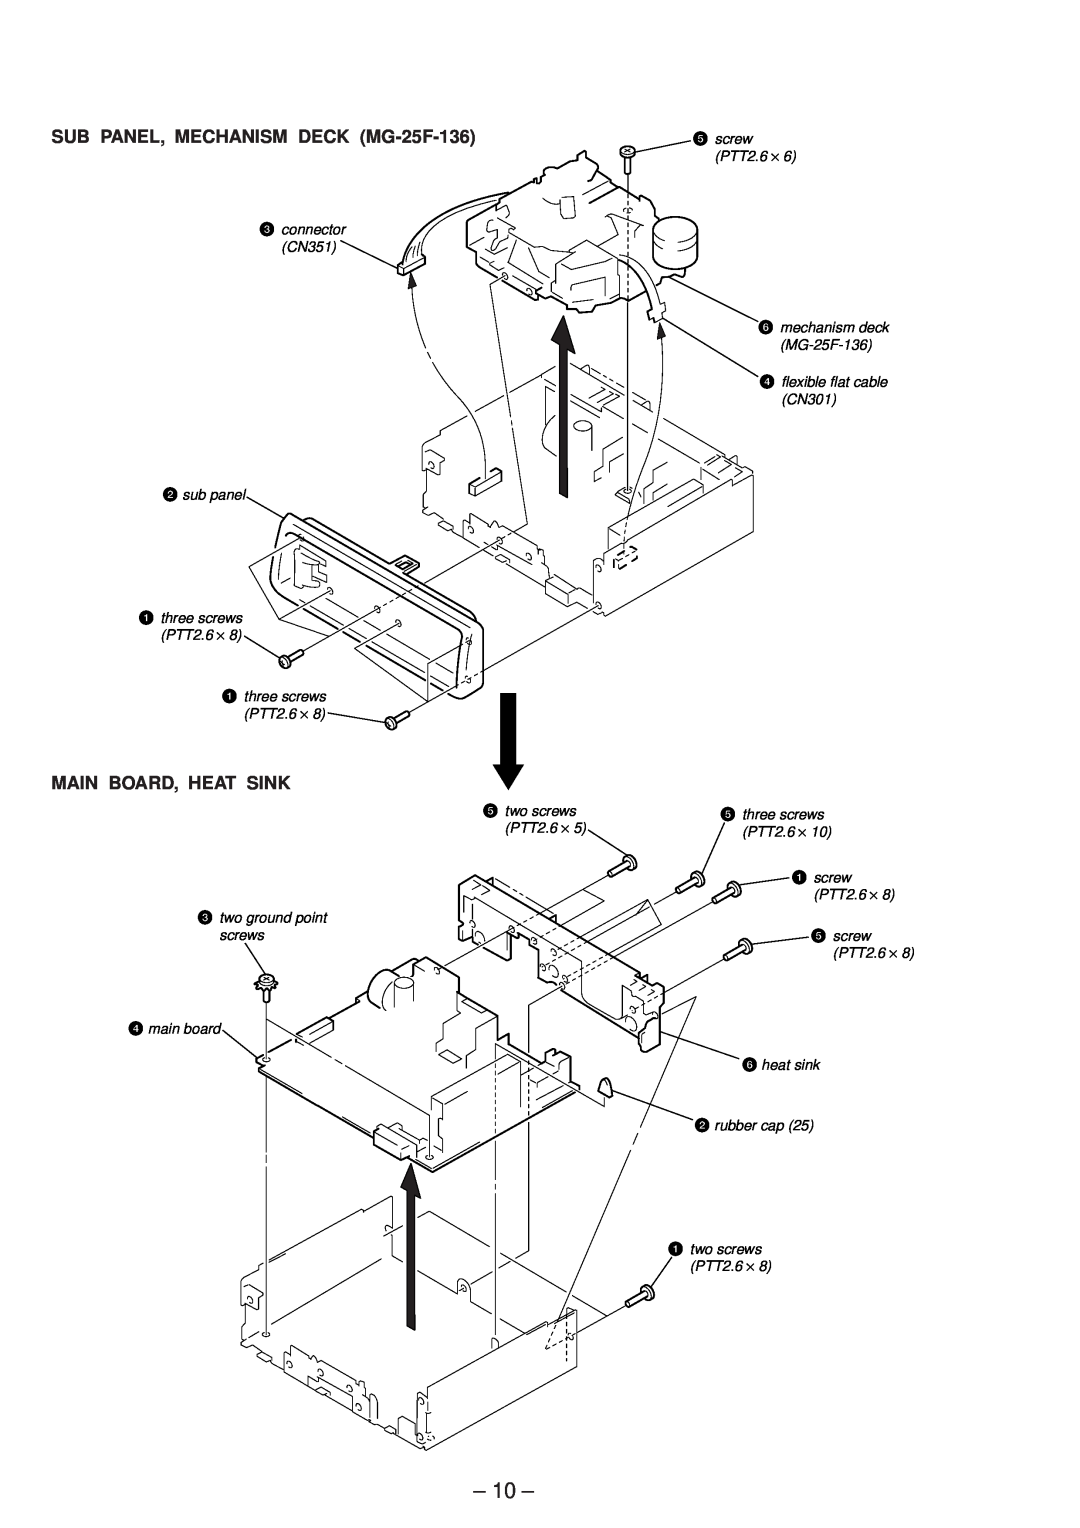 Sony XR-4803 service manual SUB PANEL, MECHANISM DECK MG-25F-136, Main Board, Heat Sink 